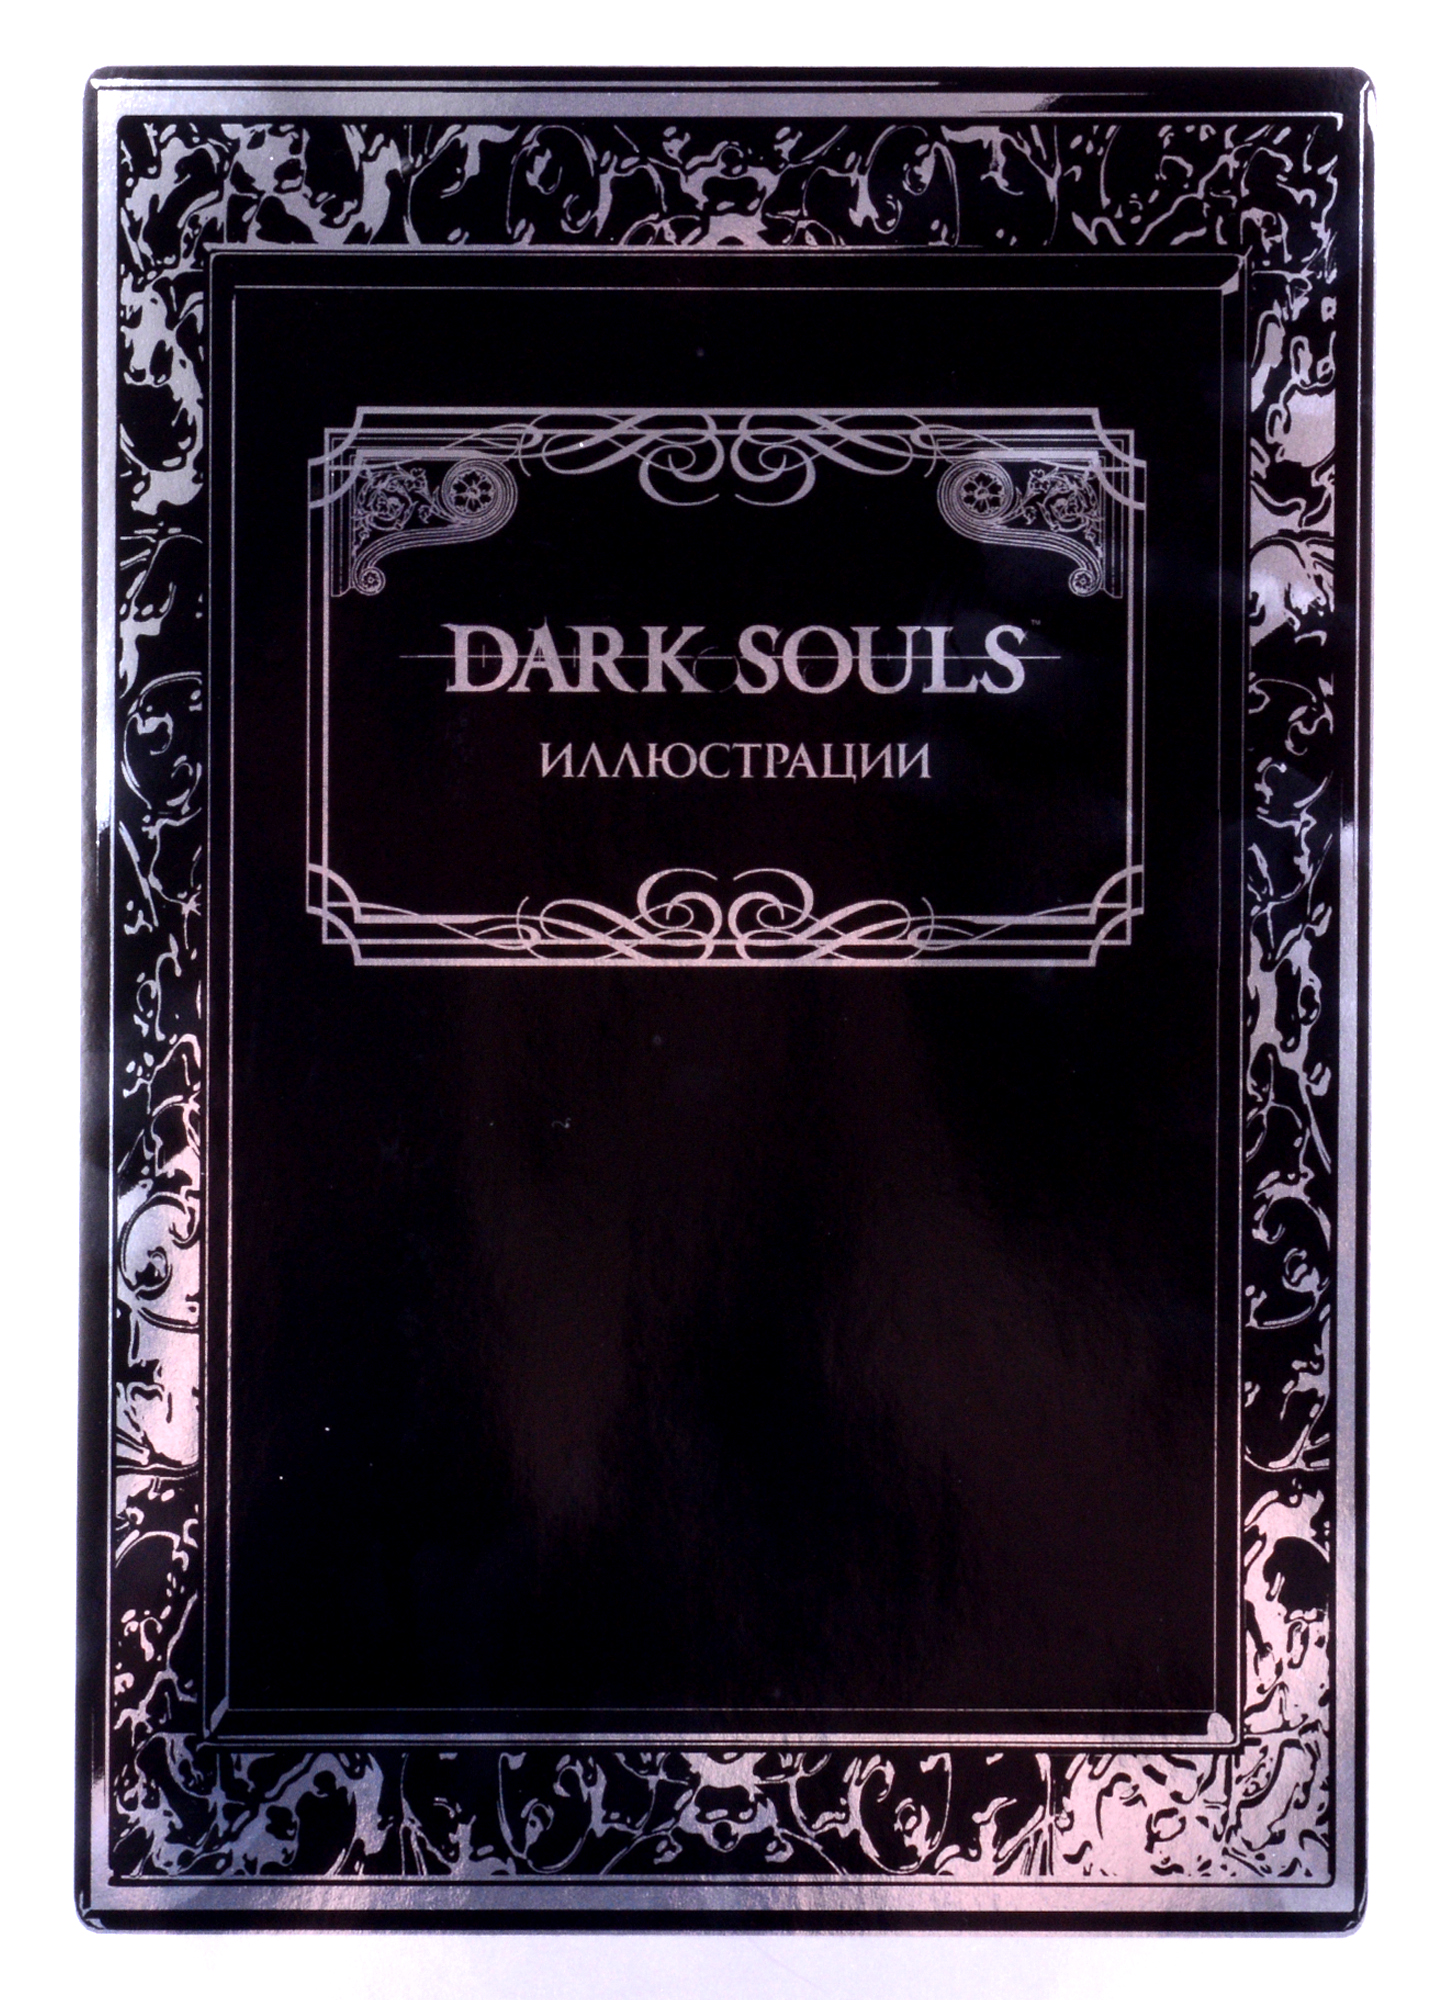 Dark Souls: Иллюстрации мечери дамьен dark souls за гранью смерти книга 1 история создания demon s souls dark souls dark souls ii